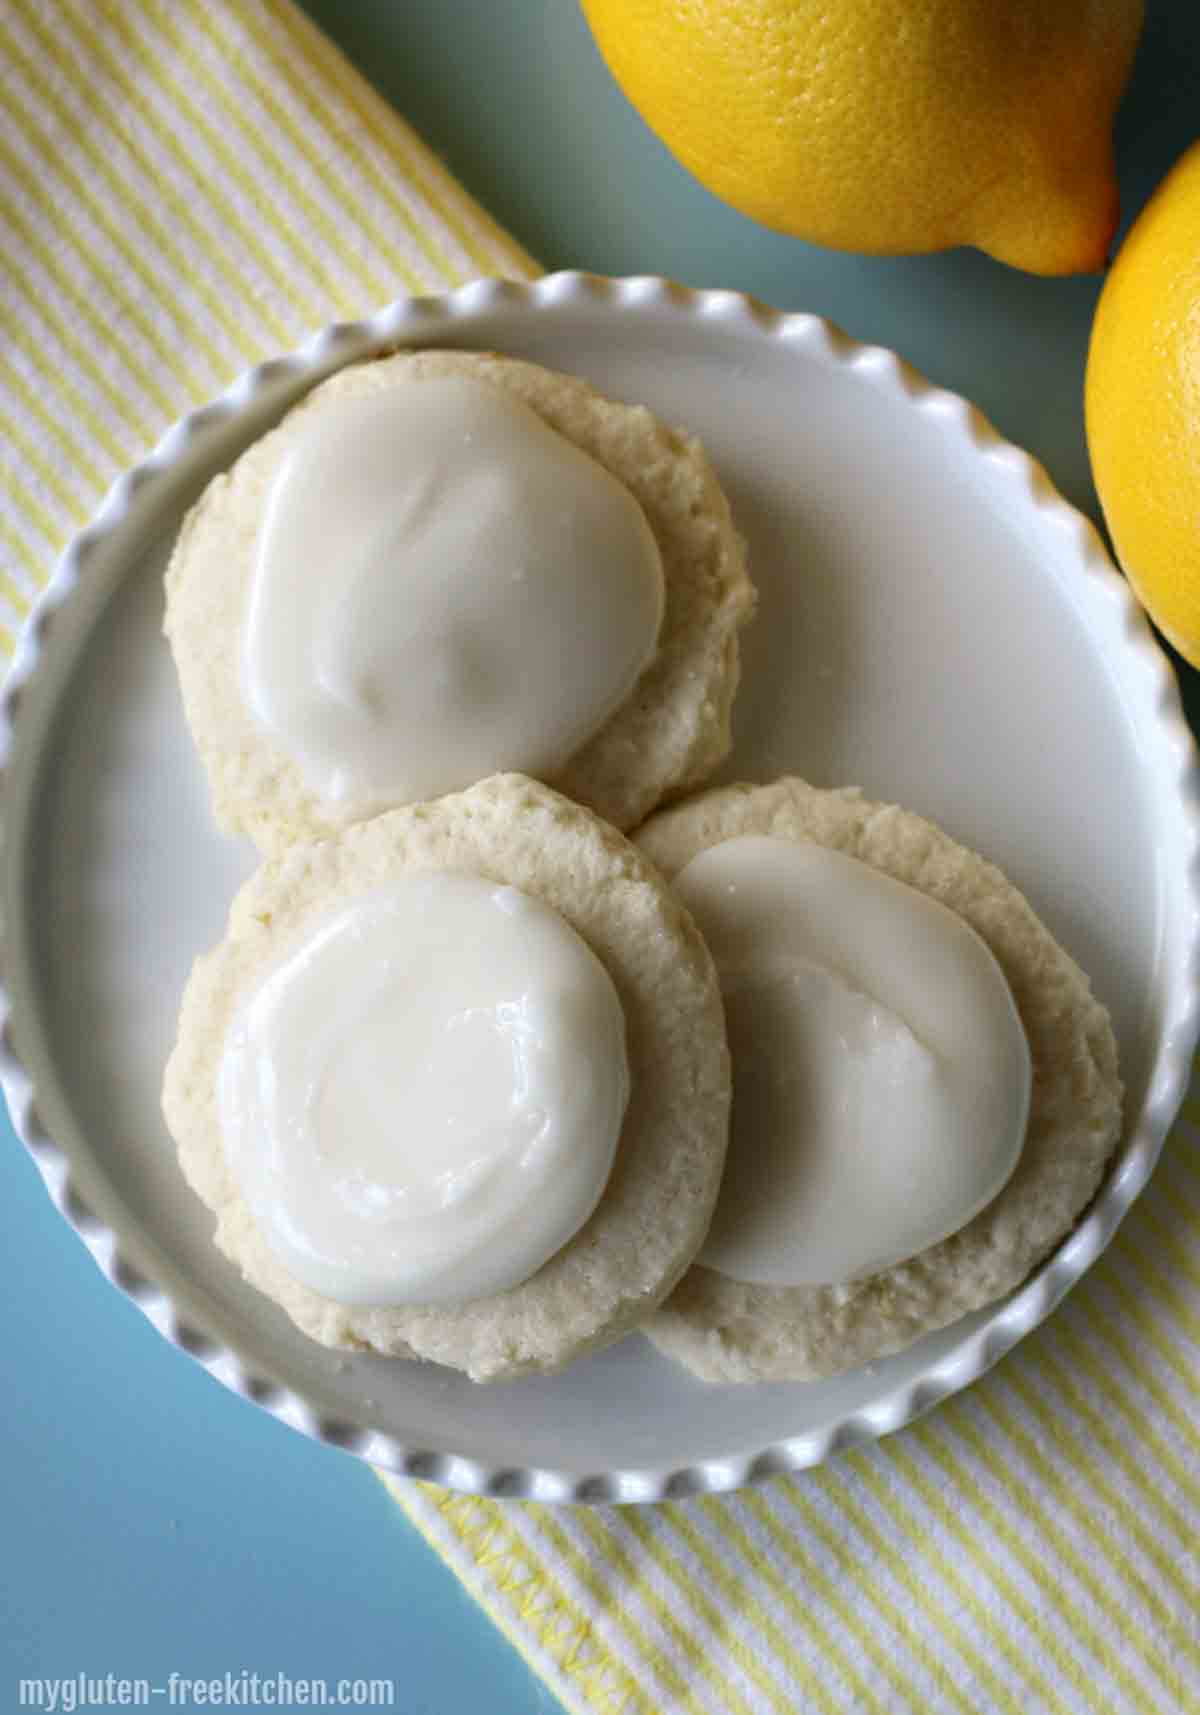 Round gluten free lemon cookies with white glaze on top.